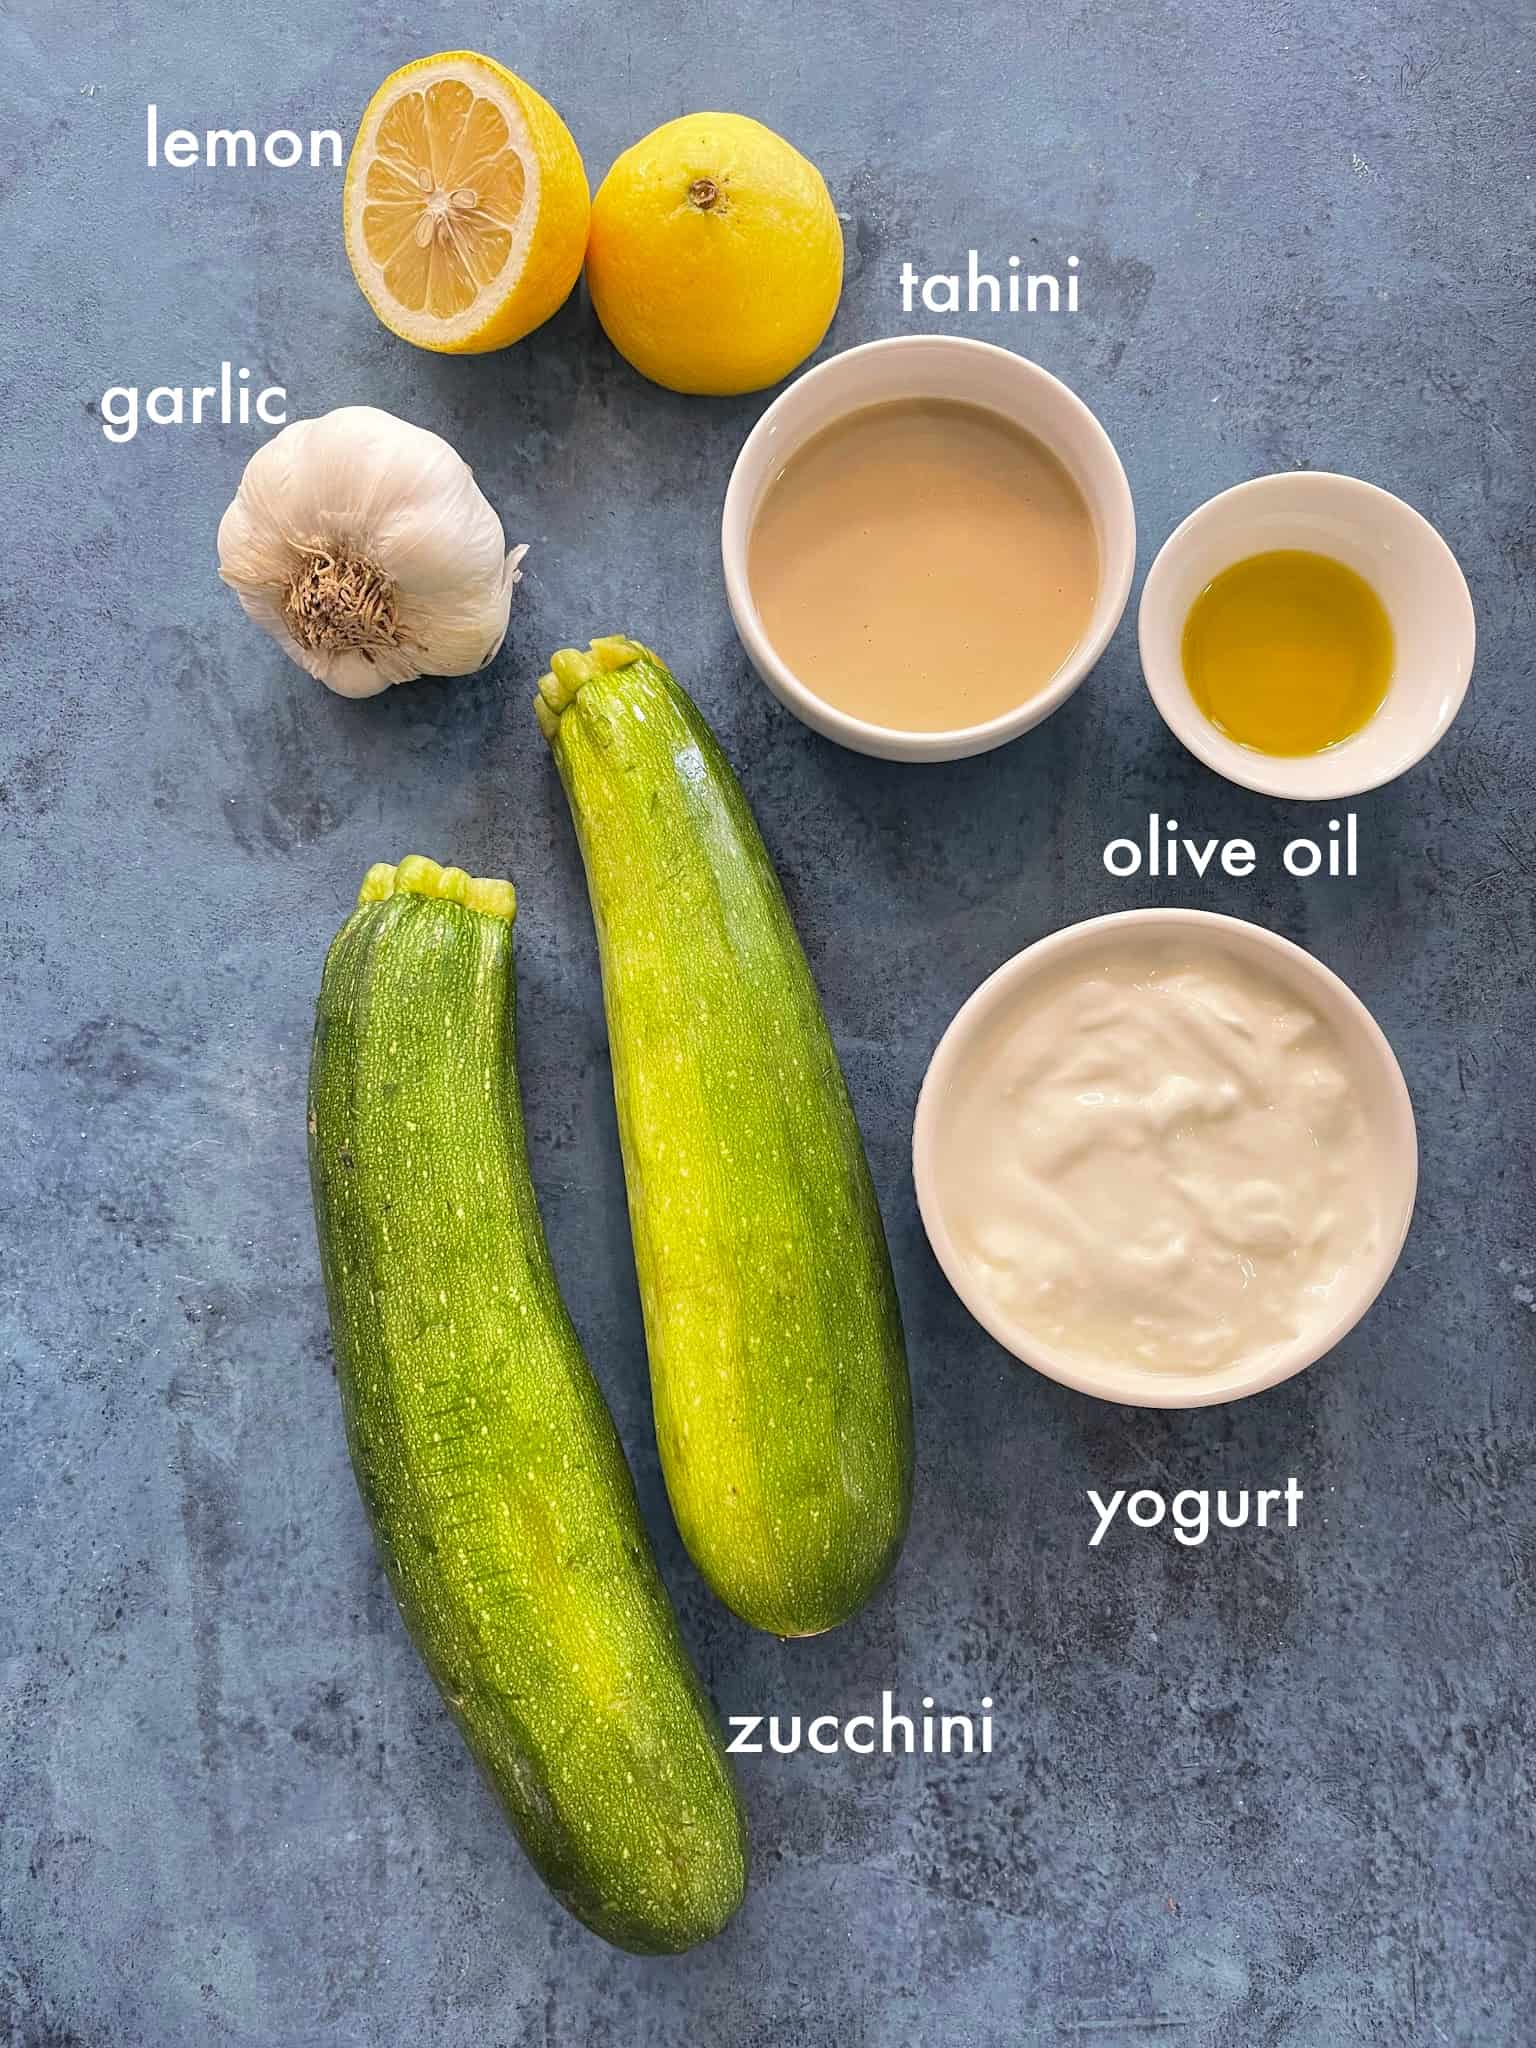 To make this recipe you need zucchini, olive oil, yogurt, tahini, lemon juice and garlic. 